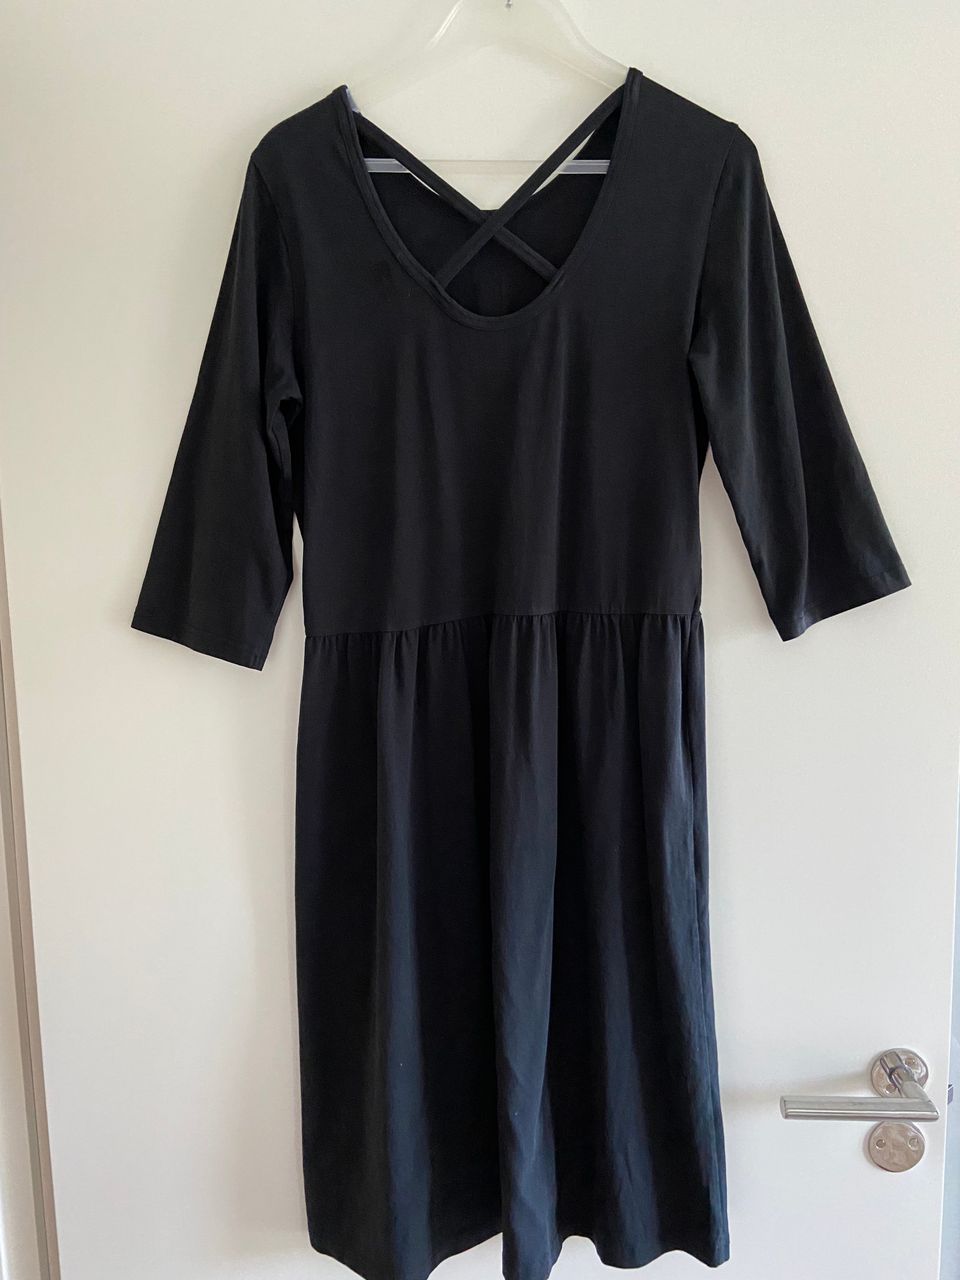 Musta cross dress, Kaiko